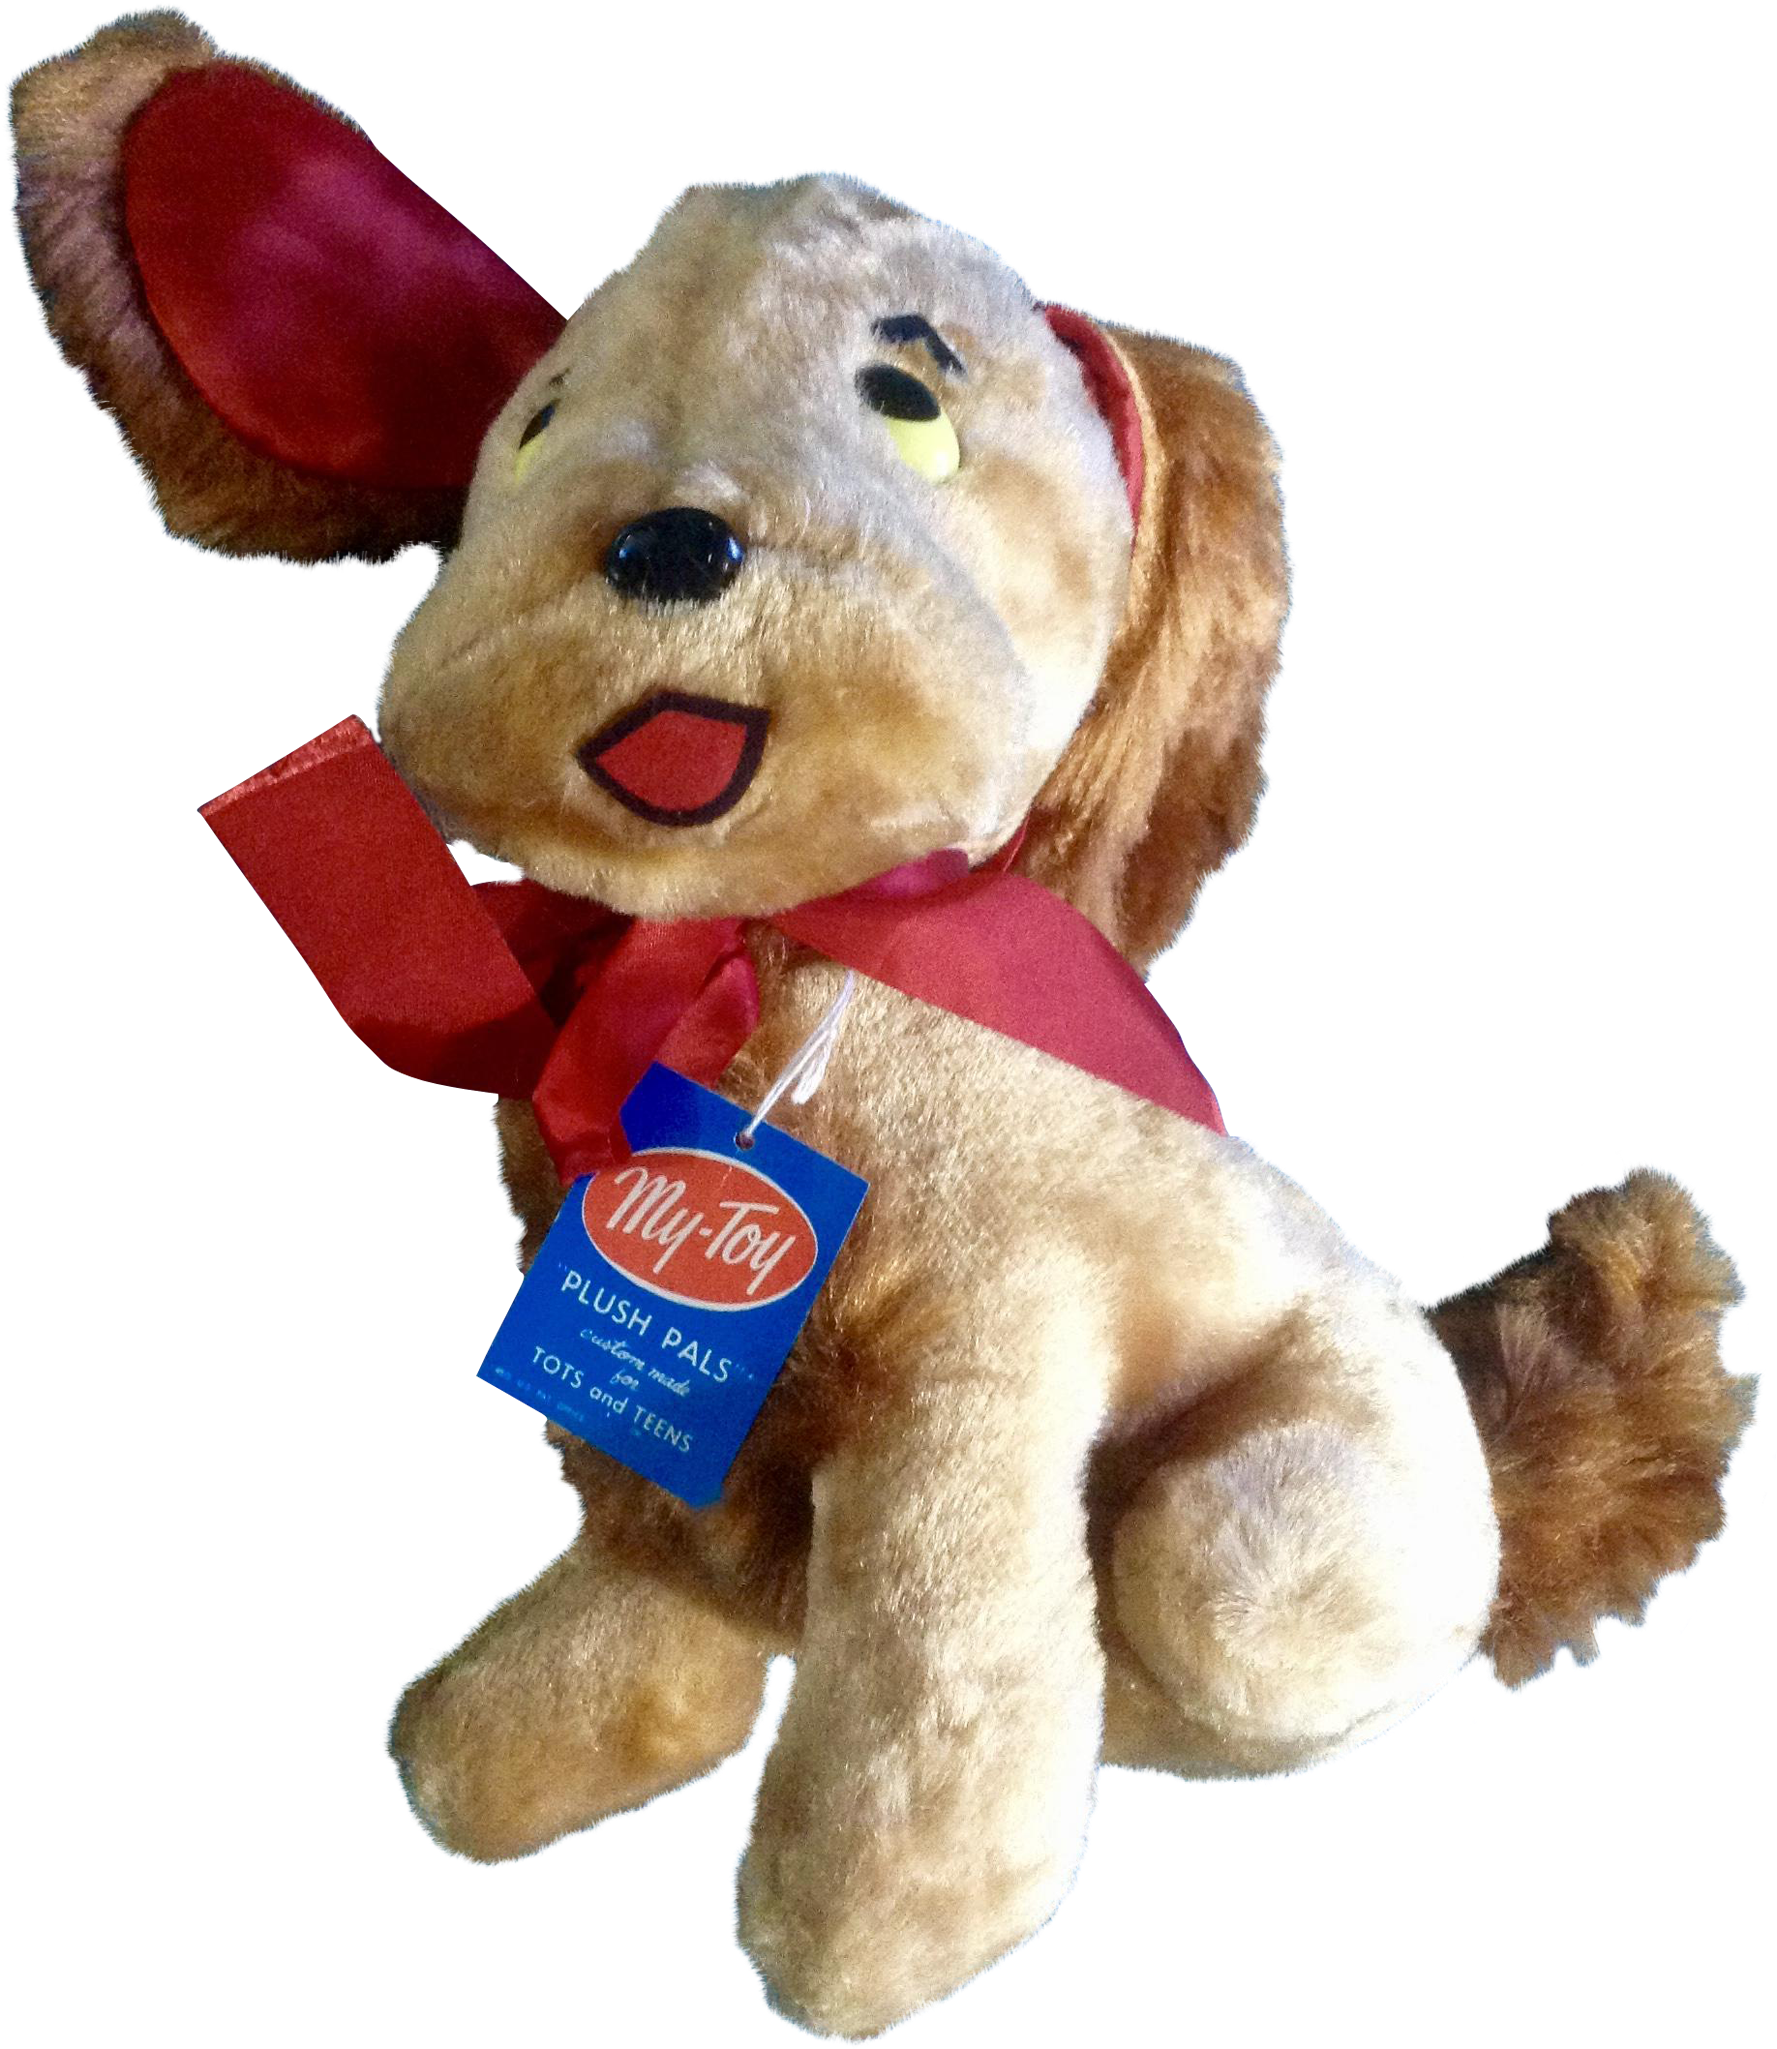 Vintage My Toy Plush Pals Dog Stuffed Animal Minty - Stuffed Toy (2048x2048)